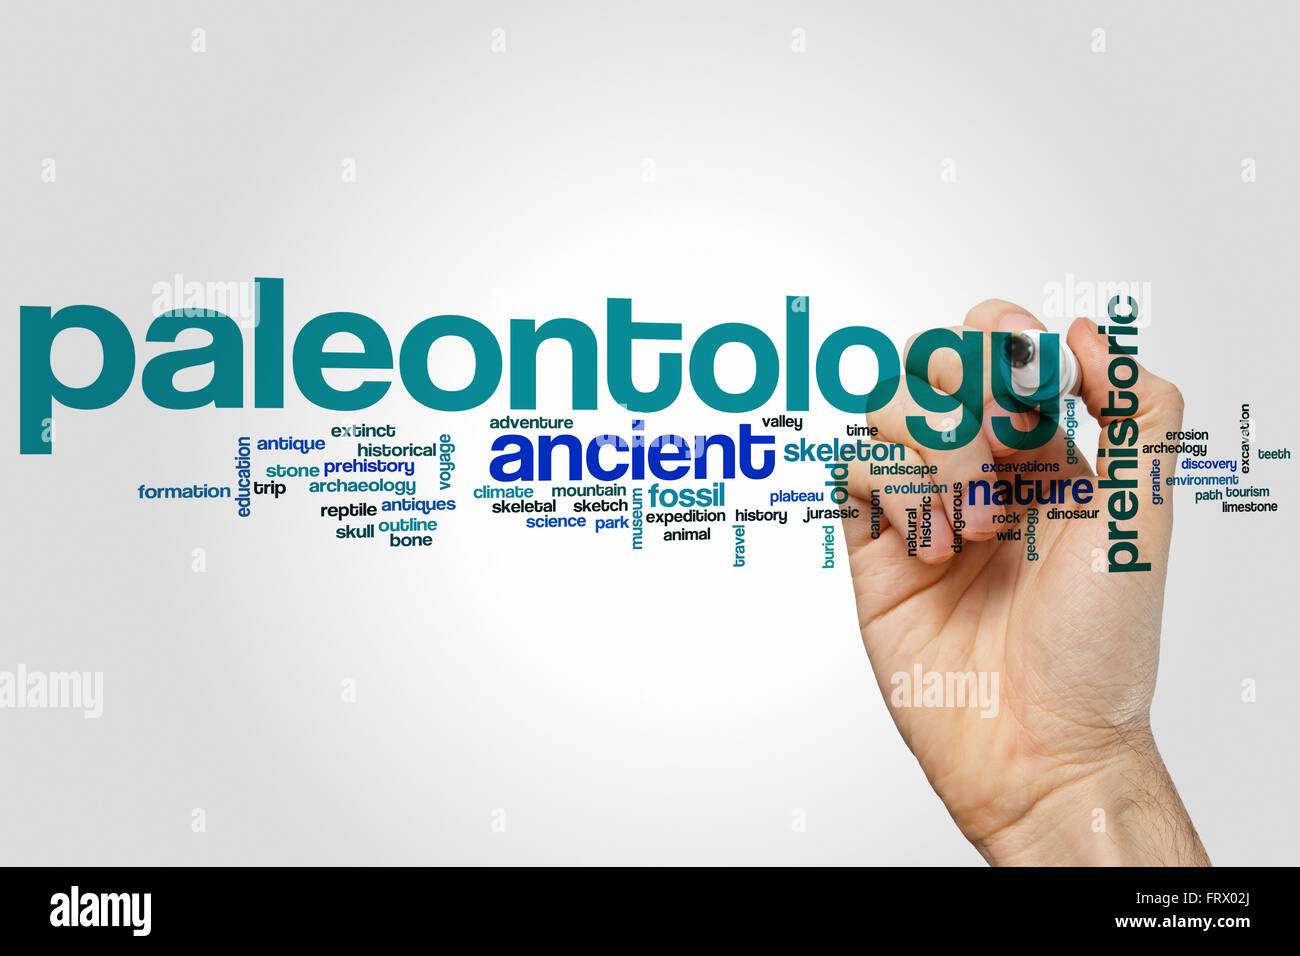 Paleontology concept word cloud background Stock Photo